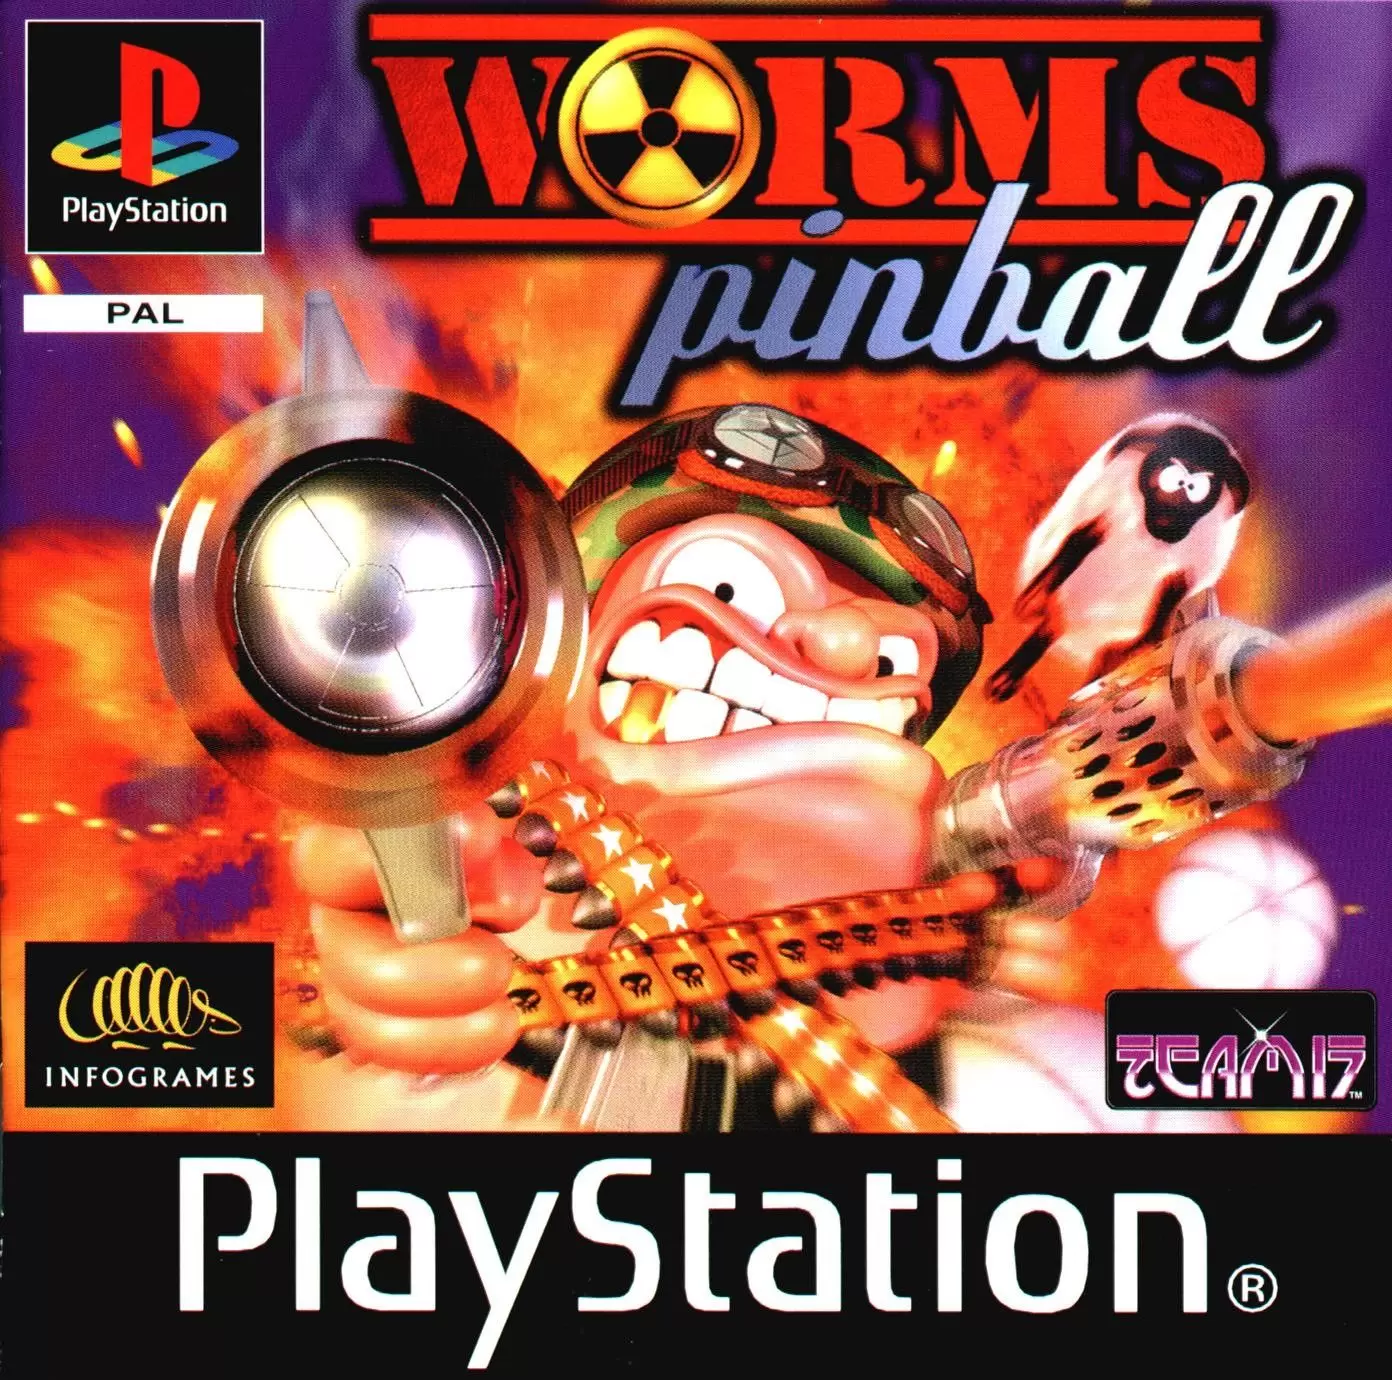 Playstation games - Worms Pinball